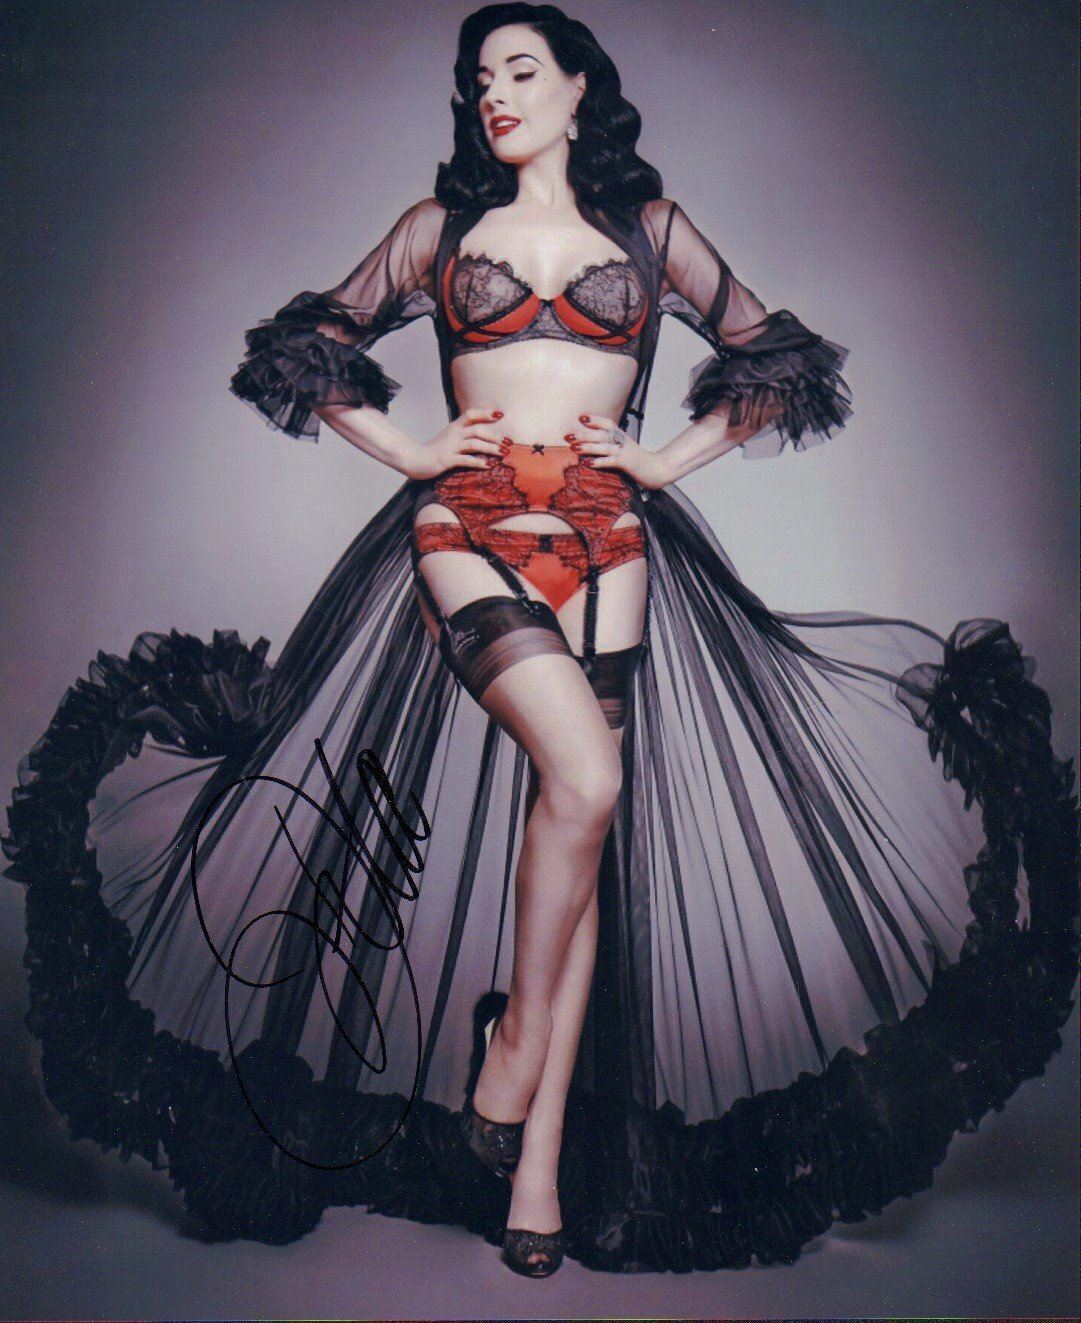 DITA VON TEESE Signed Photo Poster paintinggraph - Stunning Burlesque Model - Preprint